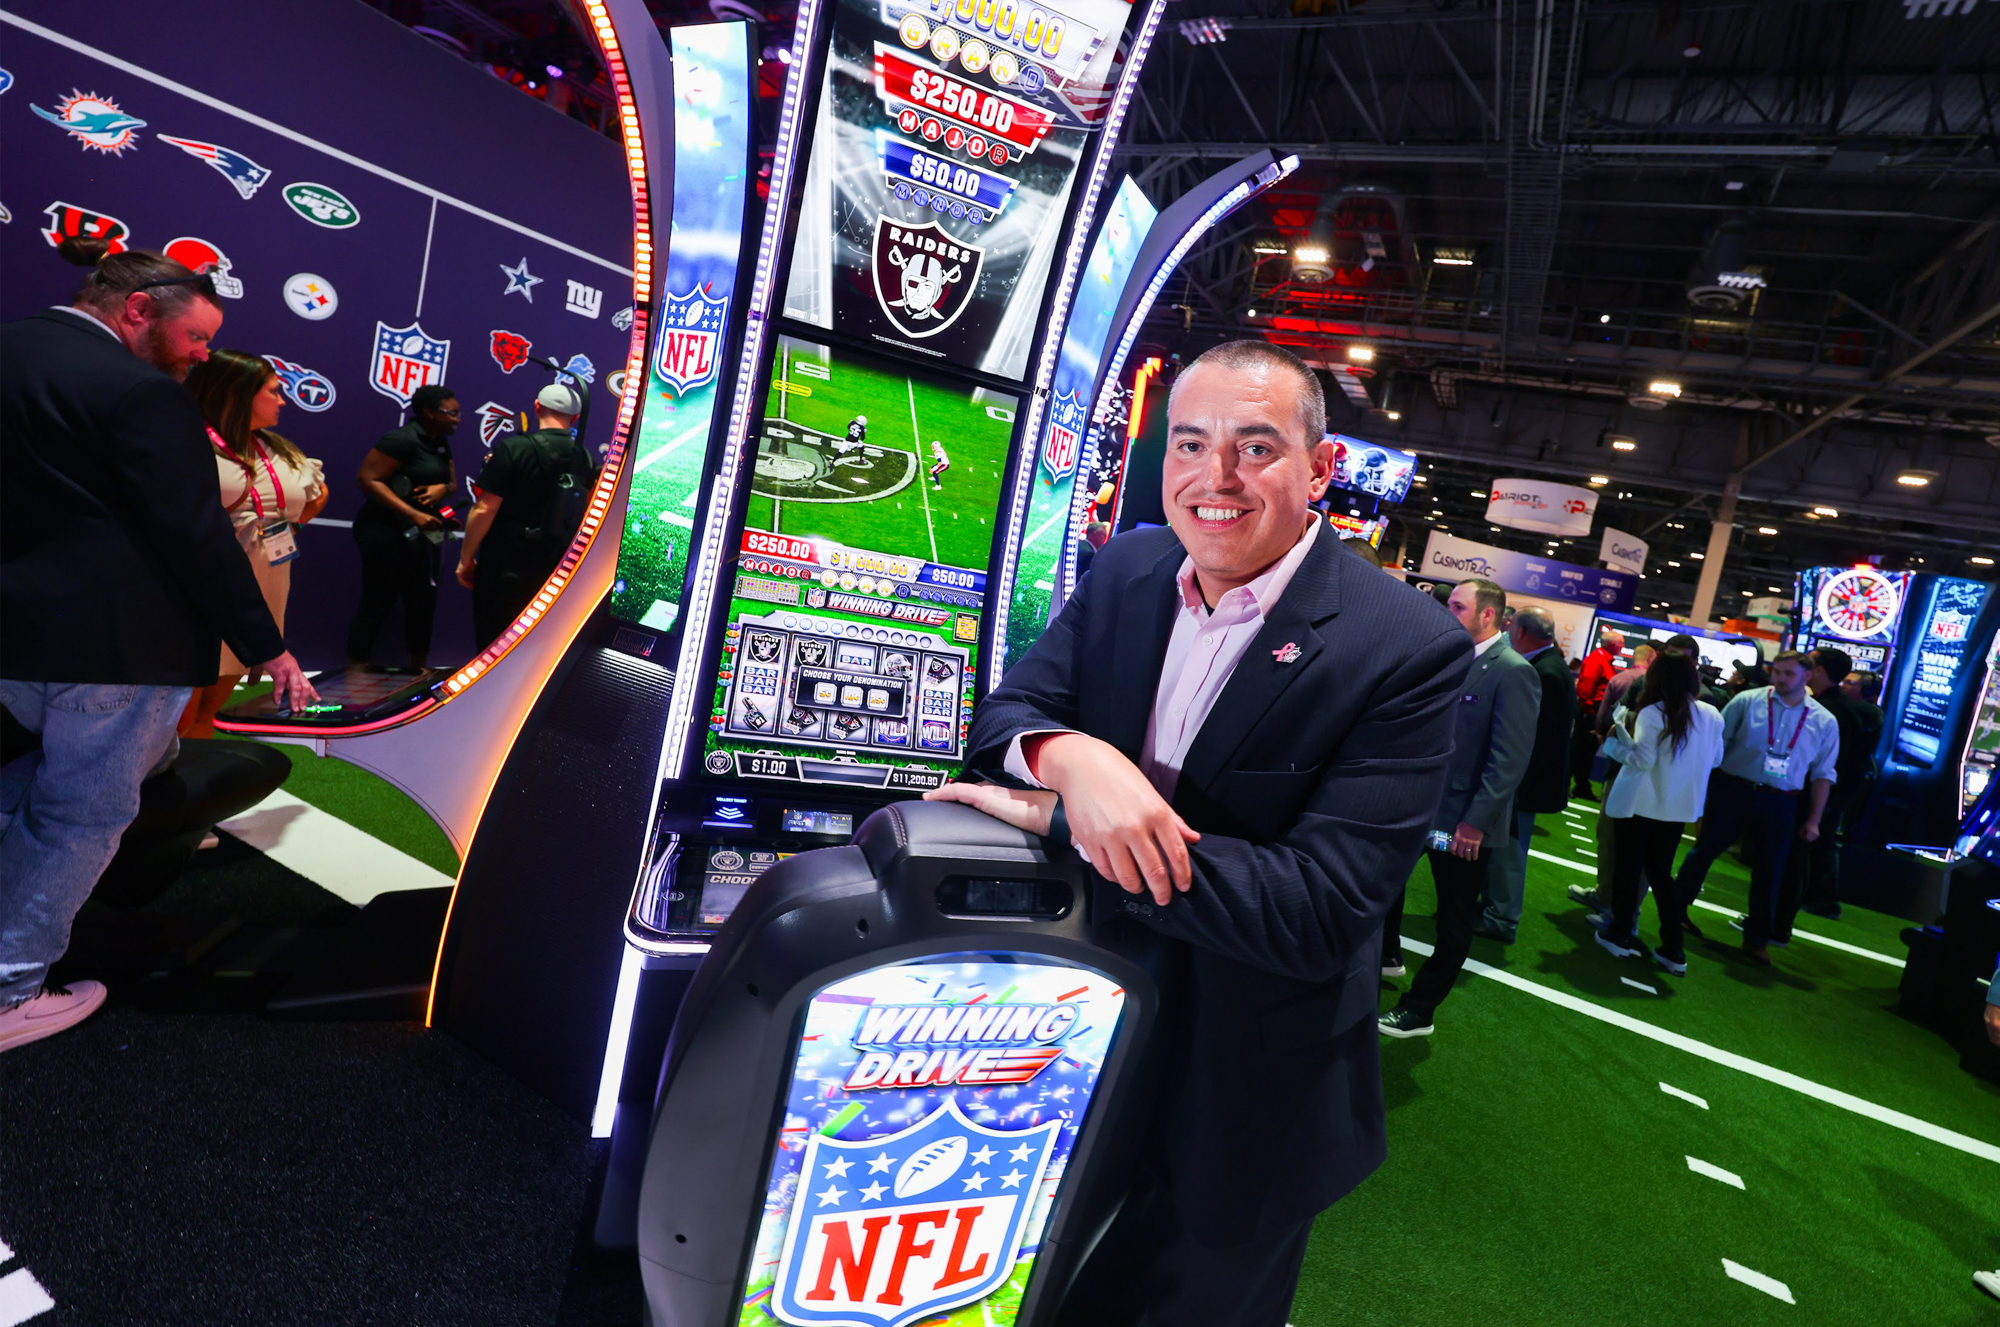 NFL-themed slot machines to make debut on Vegas strip